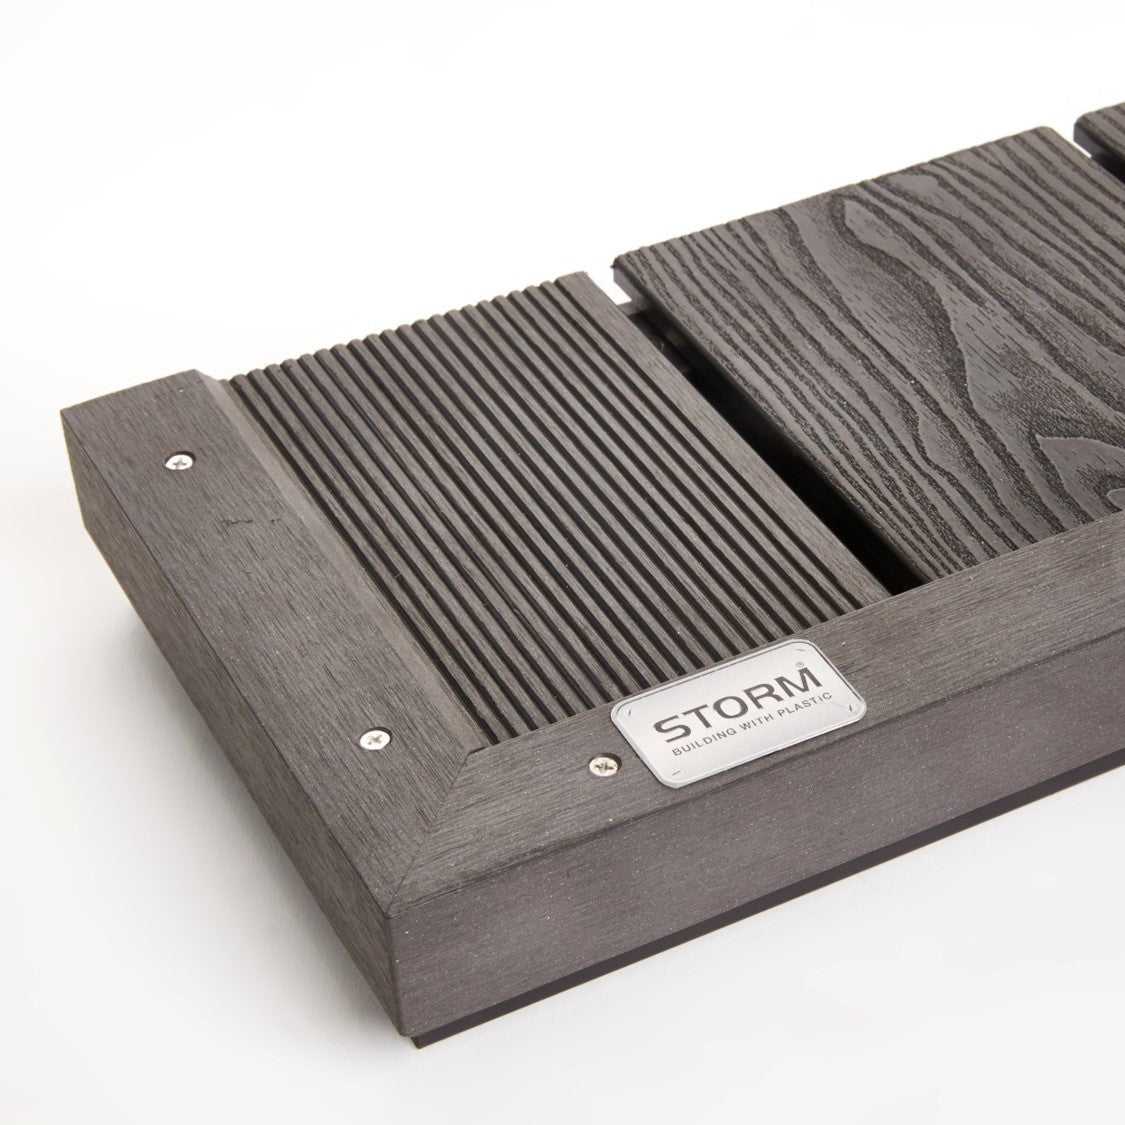 Triton 5m Double Faced Woodgrain Composite Decking Board 148mm X 25mm - Trade Warehouse